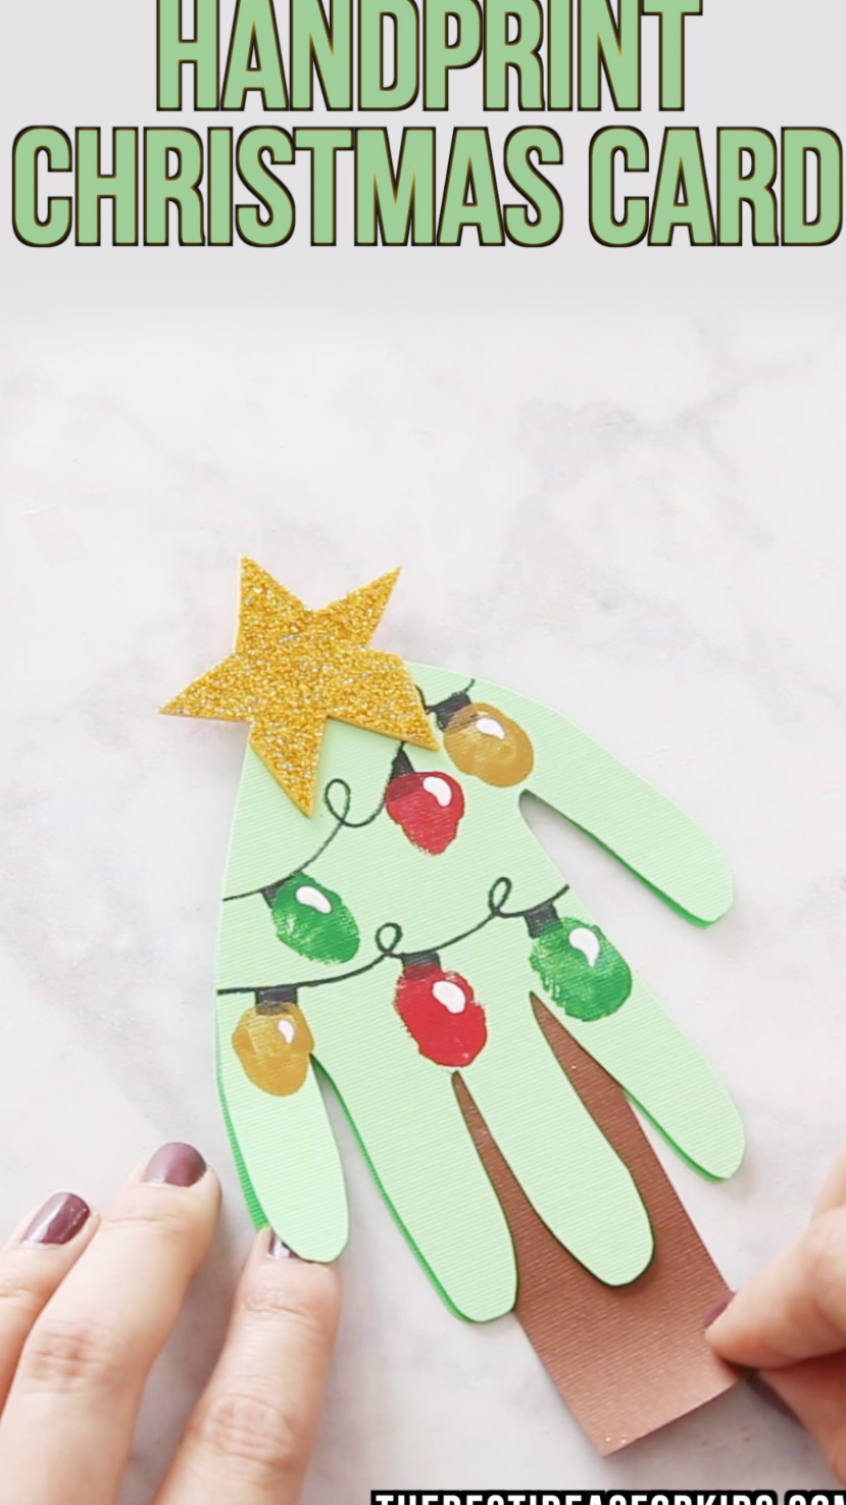 Handprint Christmas Card - Handprint Christmas Tree Card - Handprint Christmas Card - Handprint Christmas Tree Card -   18 xmas crafts to make for kids ideas